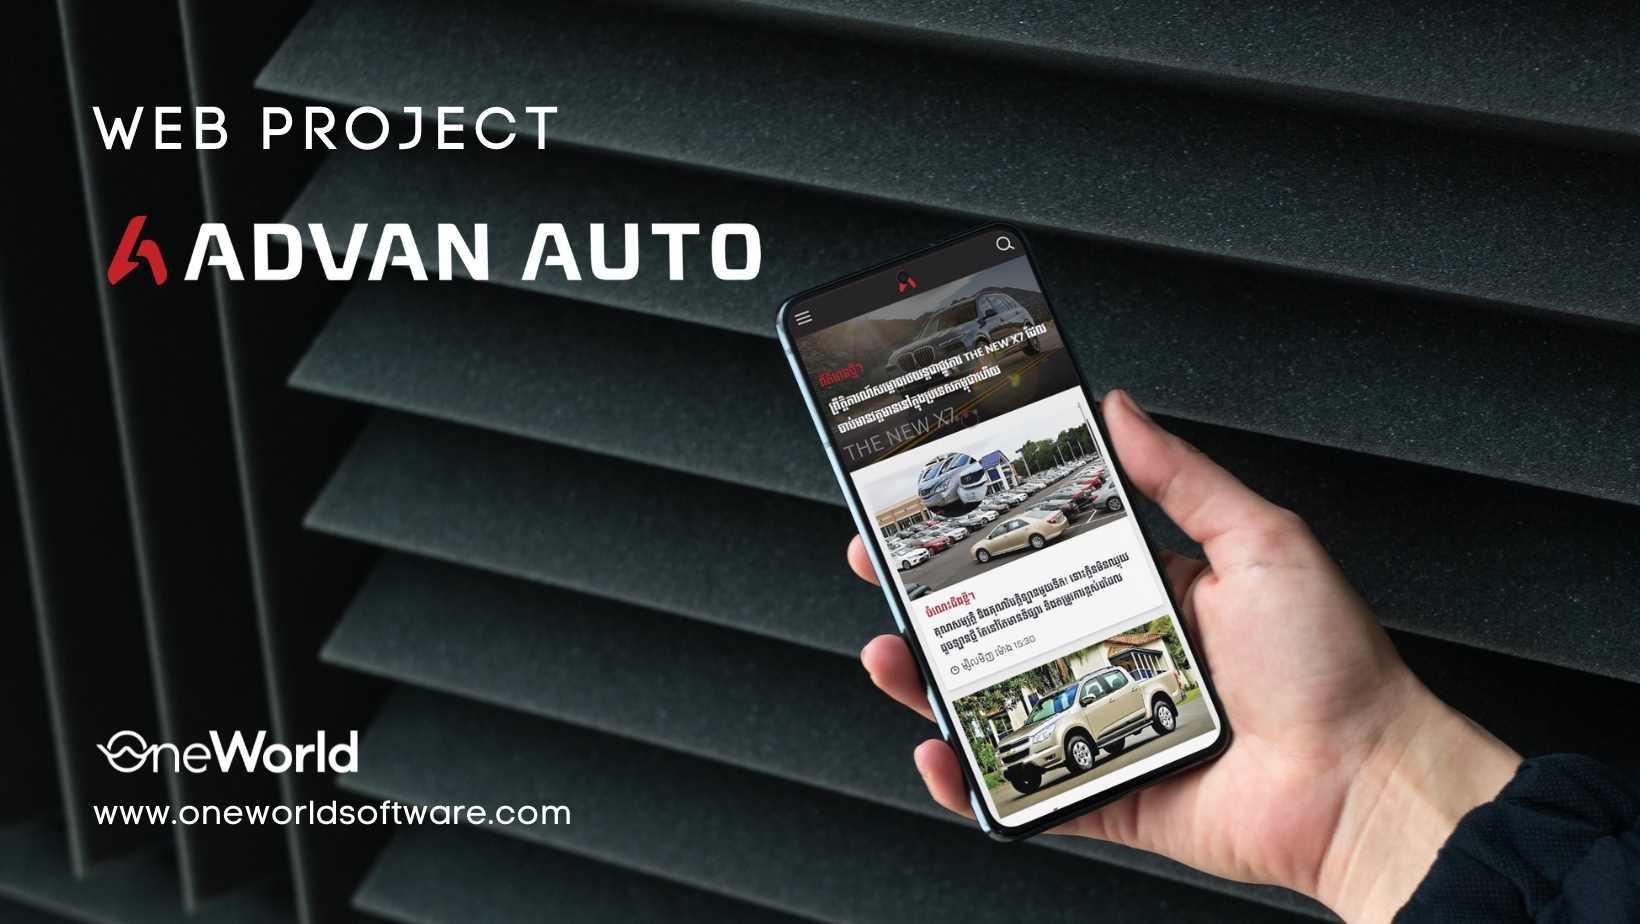 advan-auto-project.jpg